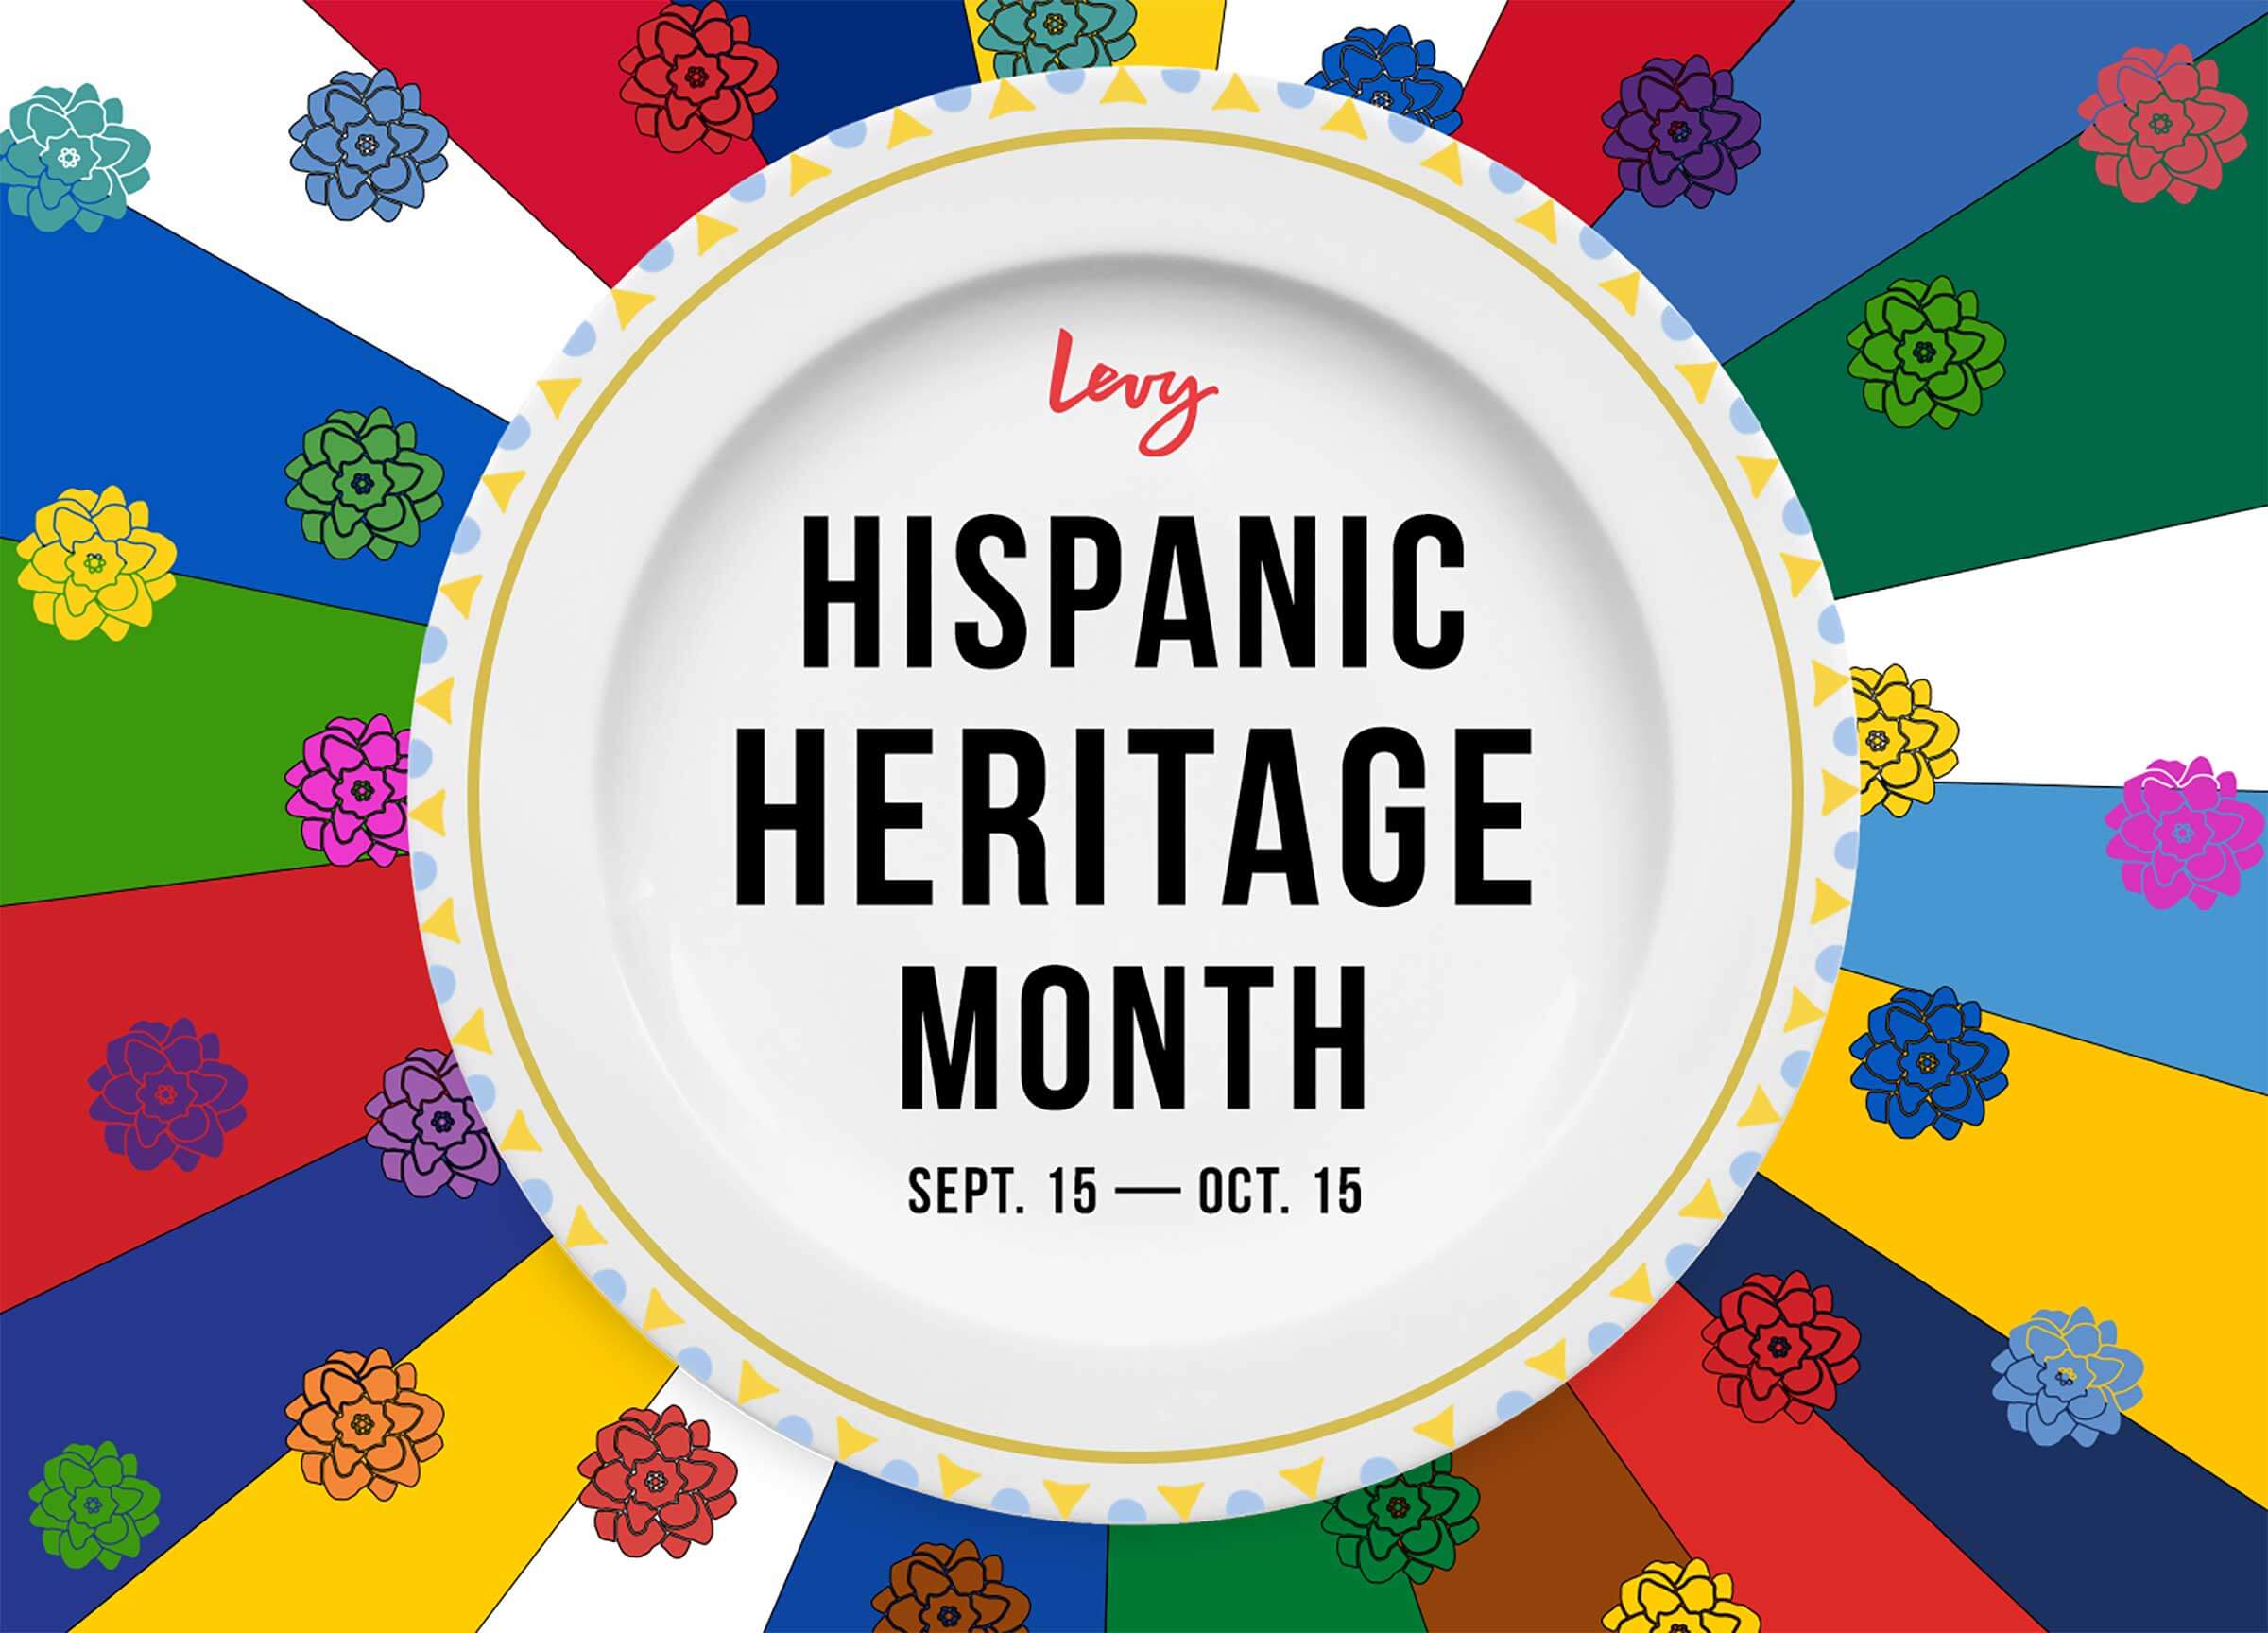 Levy Celebrates Hispanic Heritage Month